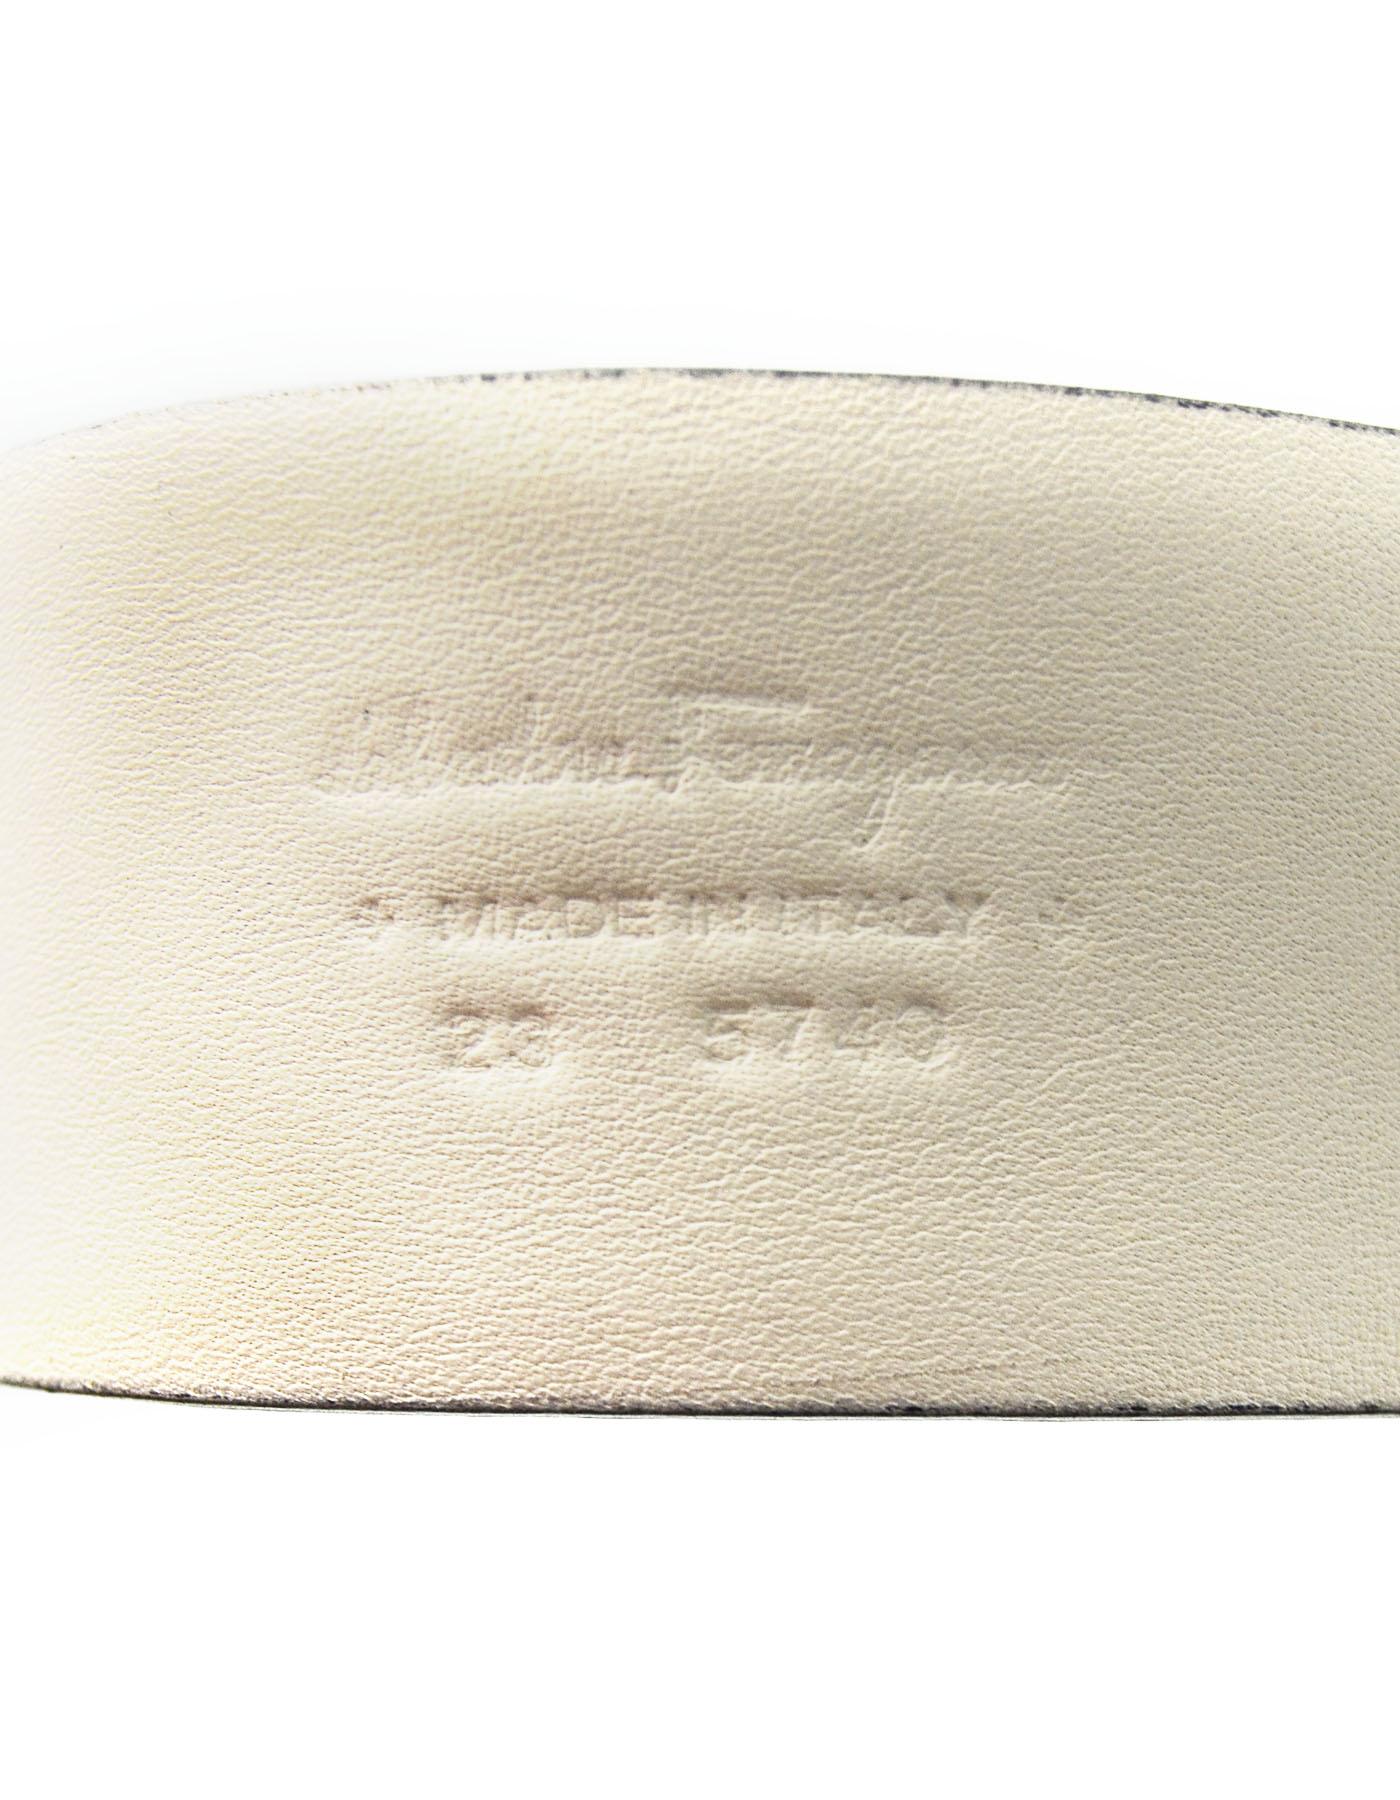 Ferragamo Black Textured Leather Gancio Buckle Belt sz 33.5-35.5